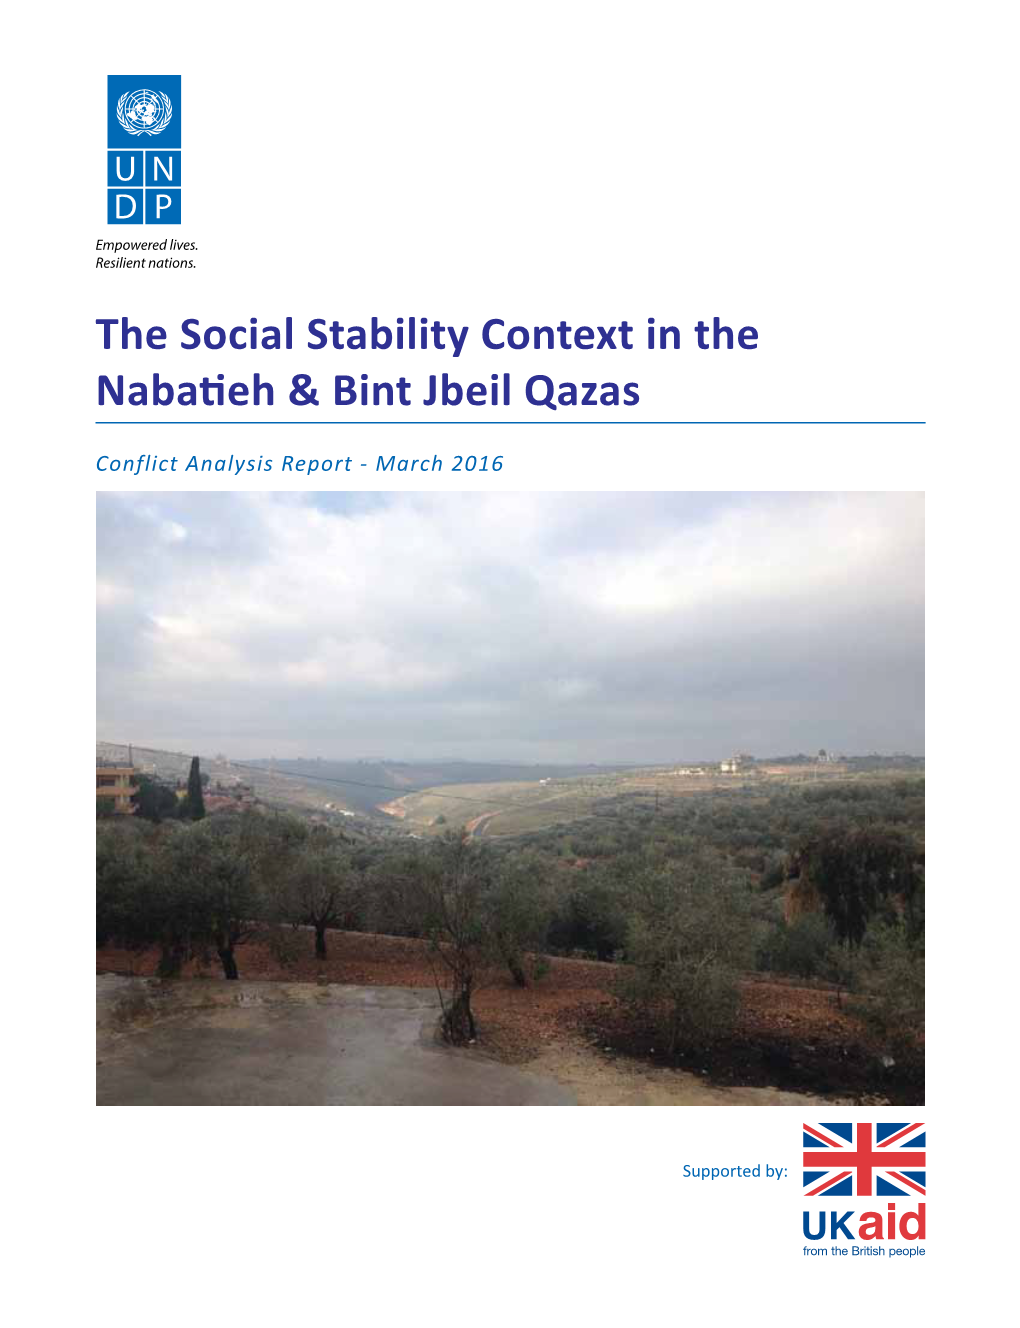 The Social Stability Context in the Nabatieh & Bint Jbeil Qazas